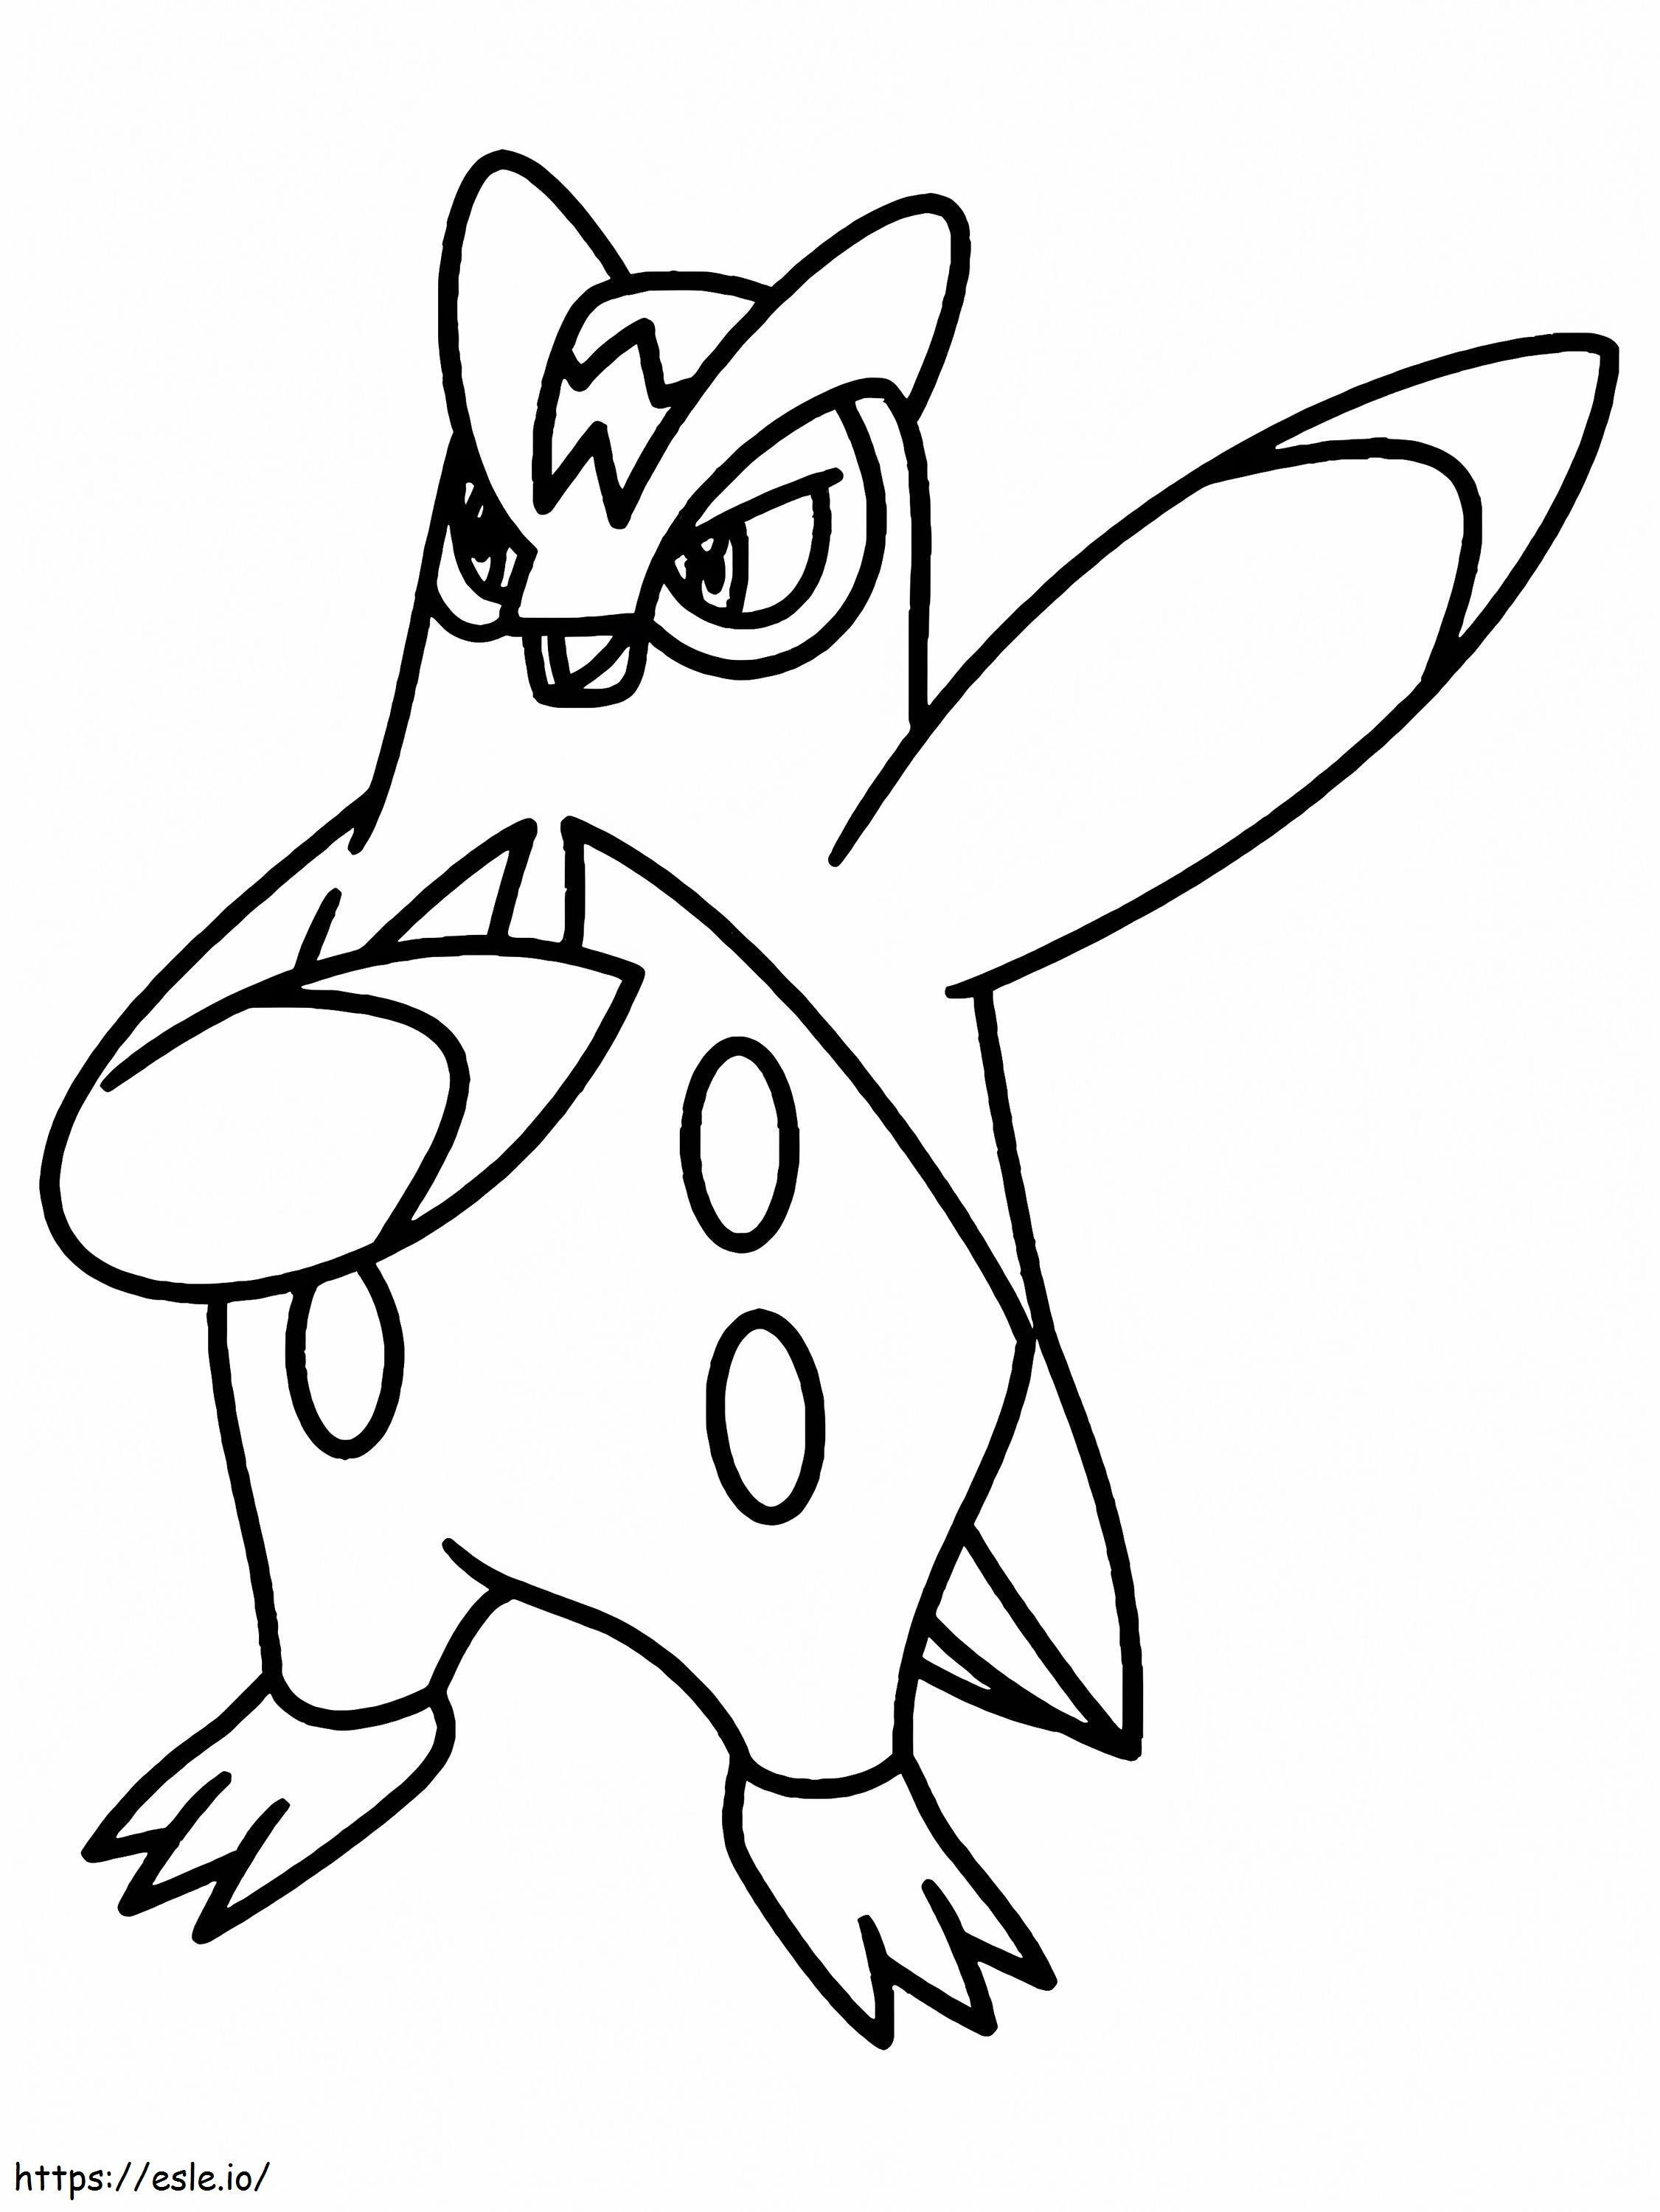 Pokemon Prinplup coloring page